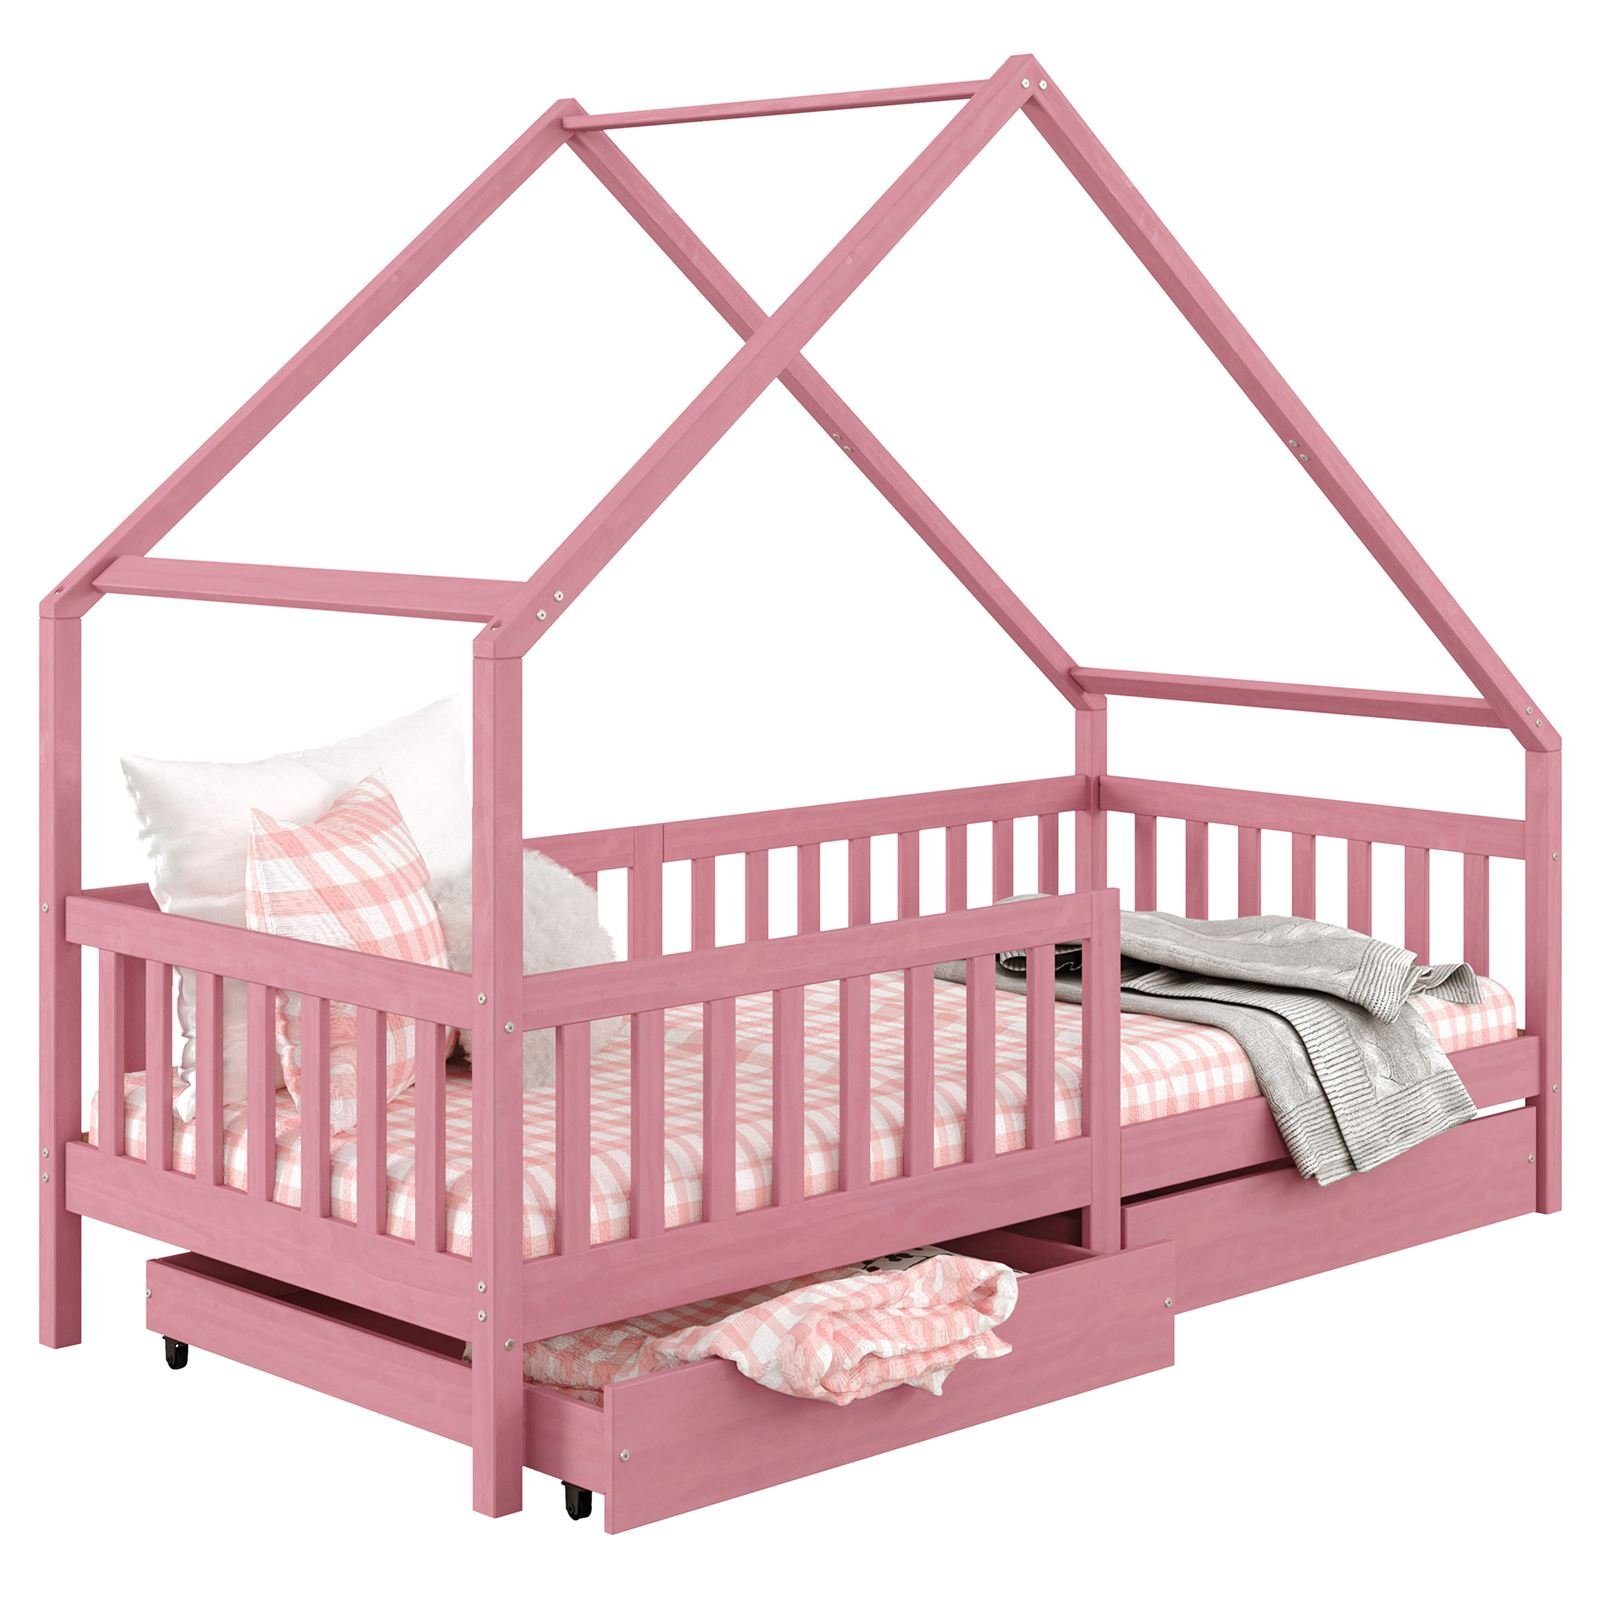 IDIMEX Kinderbett ALVA, rosa Kinderbett Kiefer Montessori 90 200 in Hausbett Schubladen 2 x